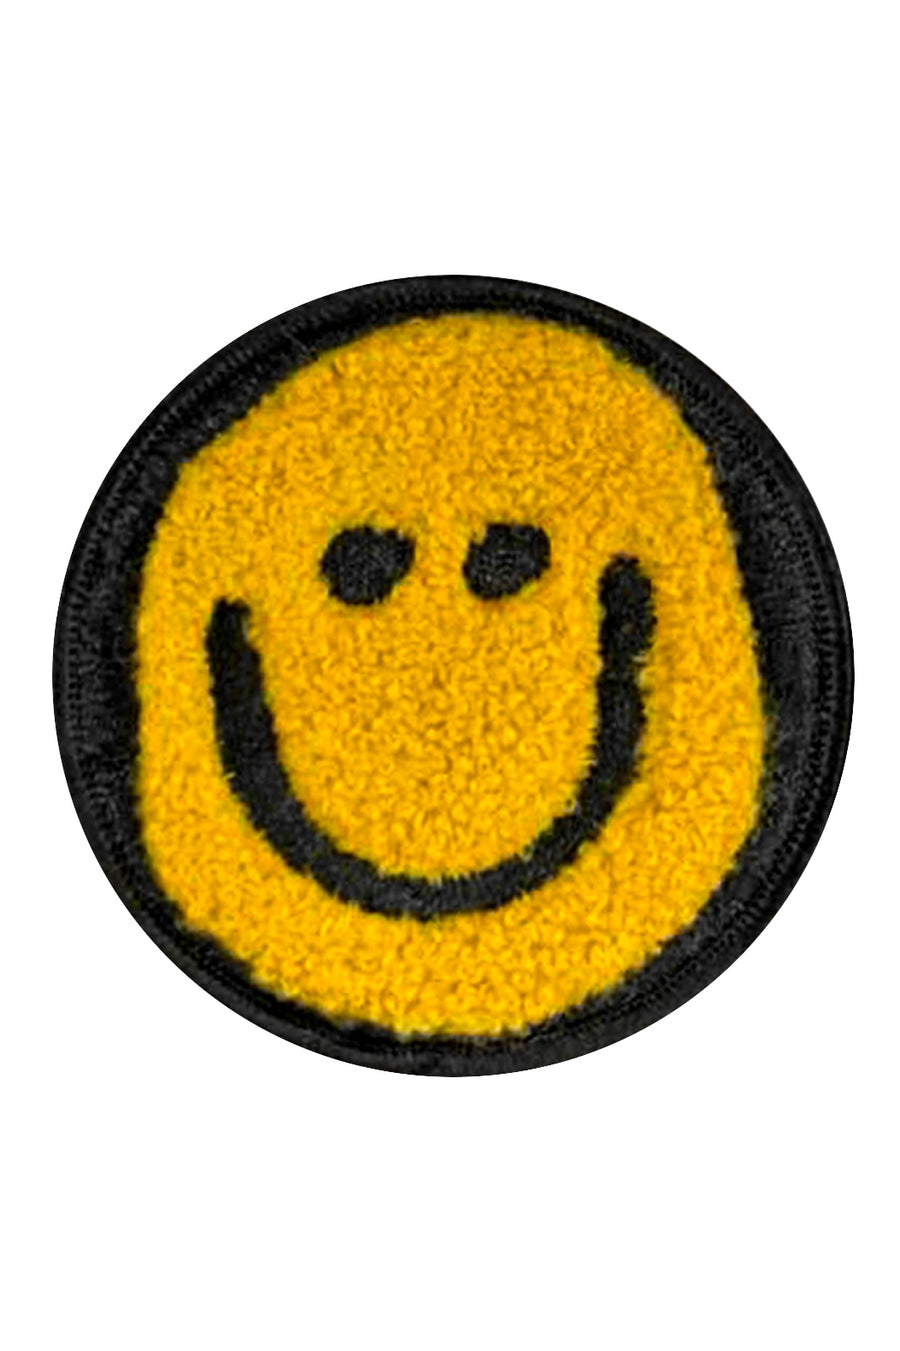 Velcro Patch Smiley Face